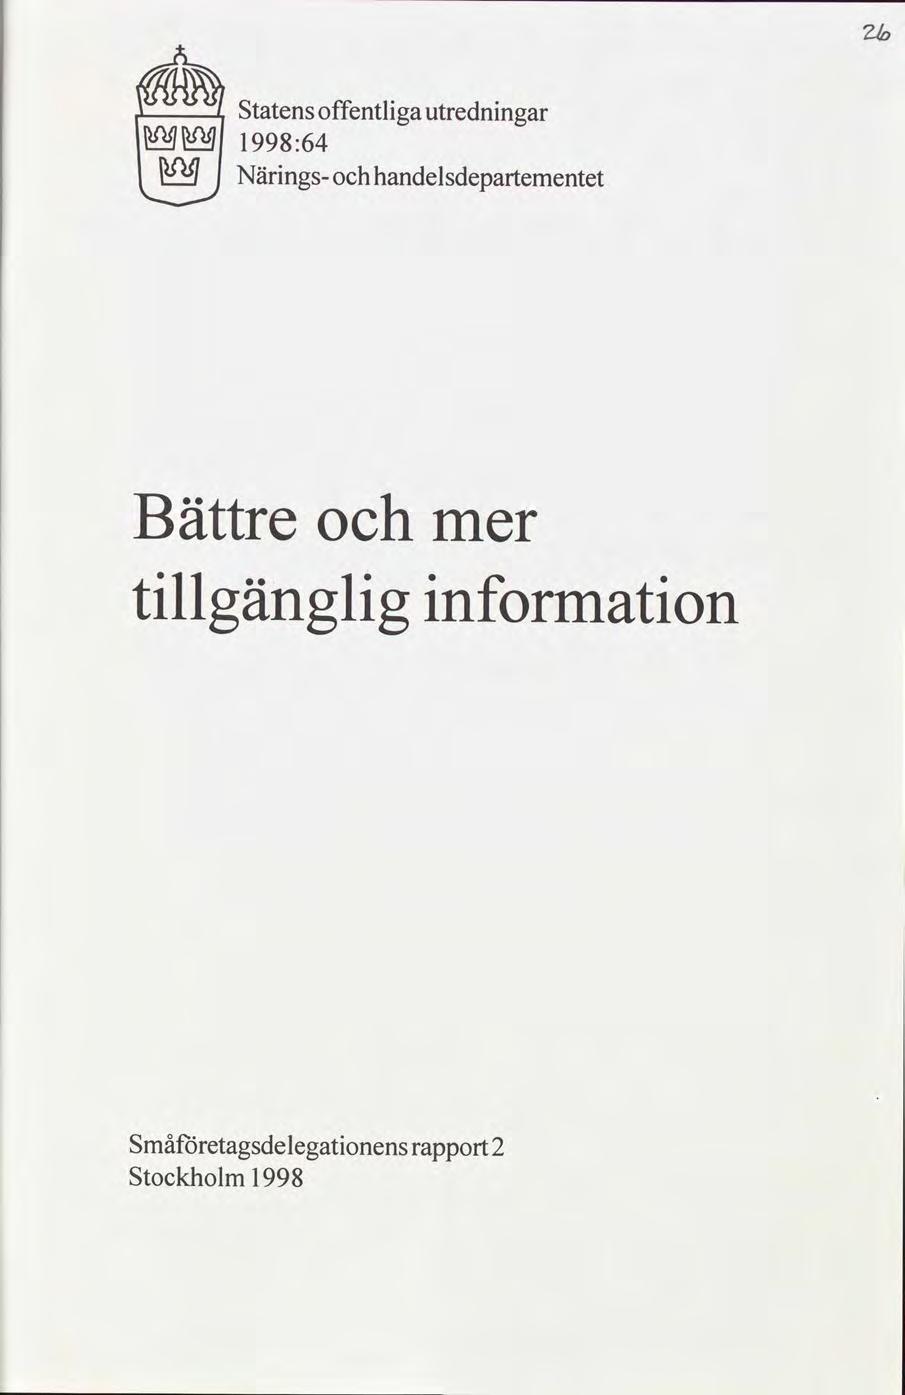 flm f Statens offentlga utrednngar BM M 1 998 :64 w Närngs-